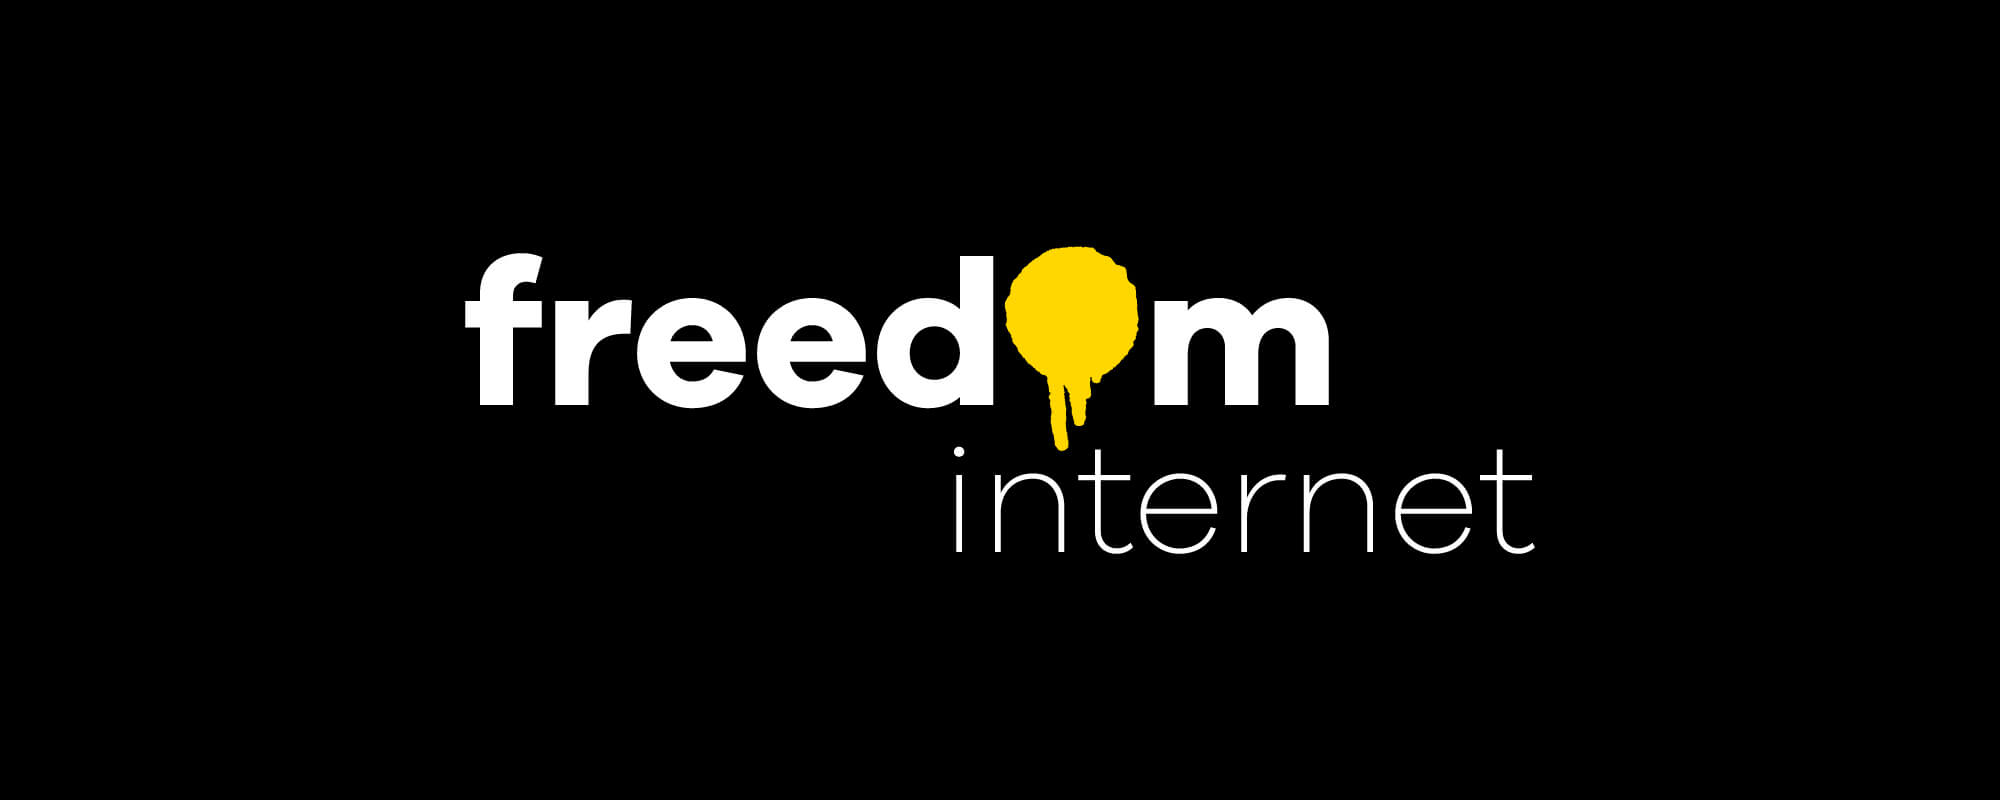 Internet, en Bellen Freedom